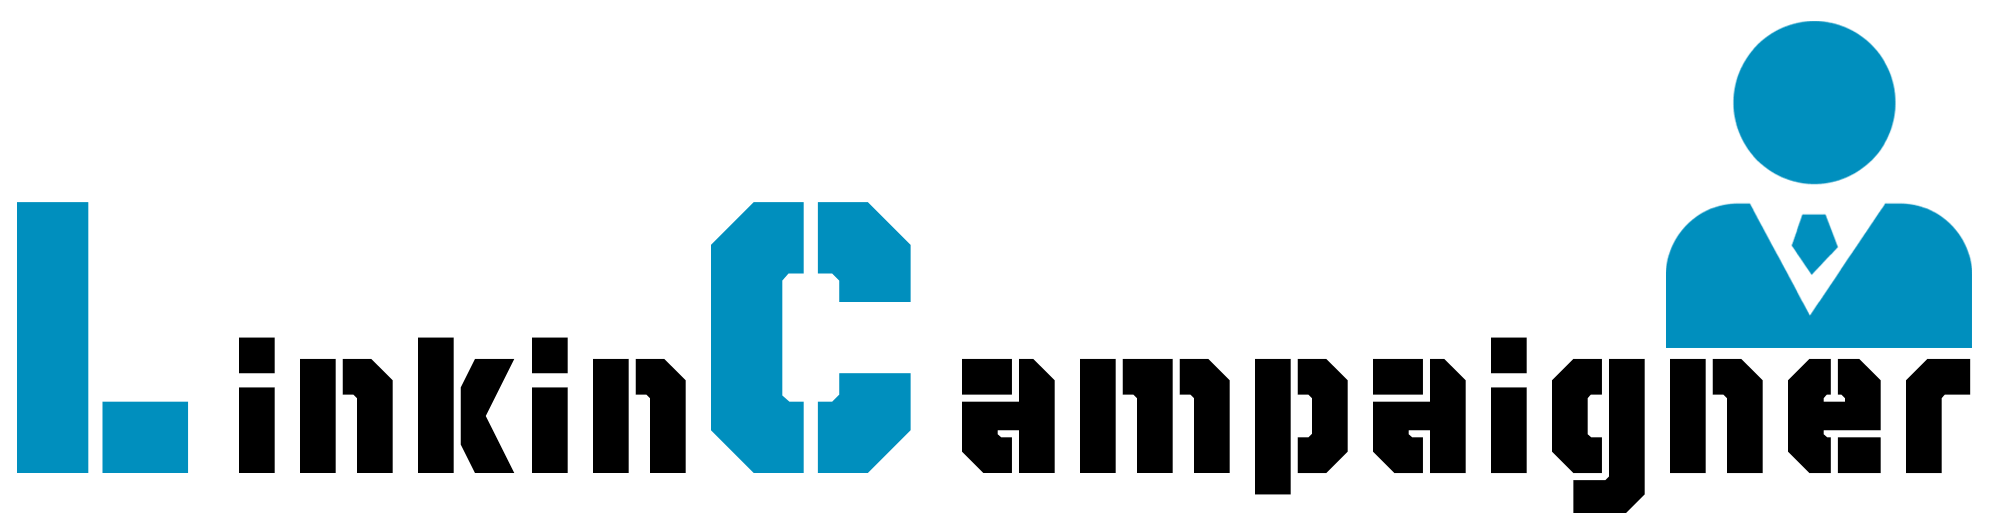 linkincampaigner-logo